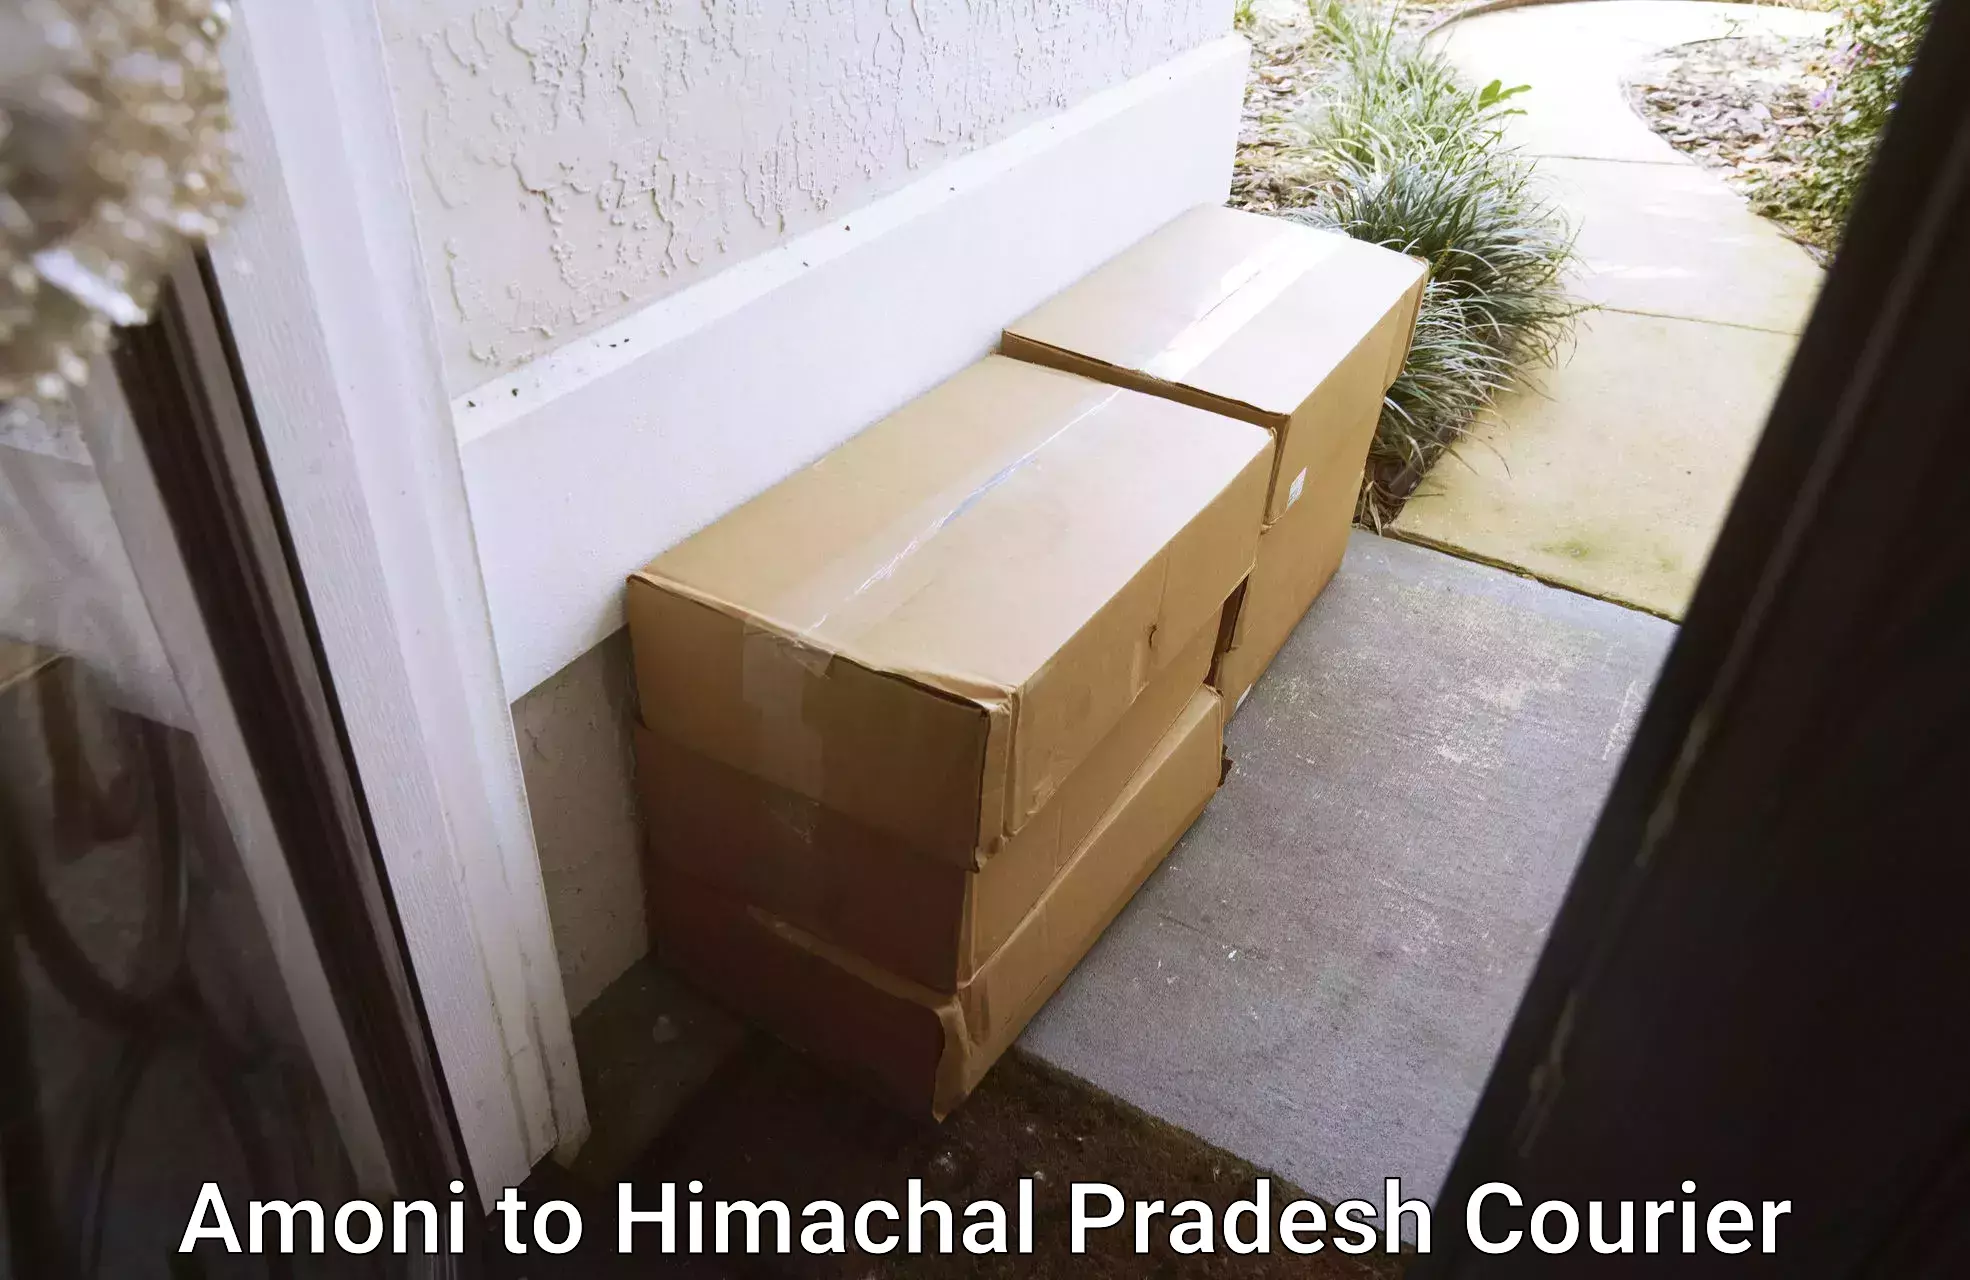 Digital courier platforms Amoni to Himachal Pradesh